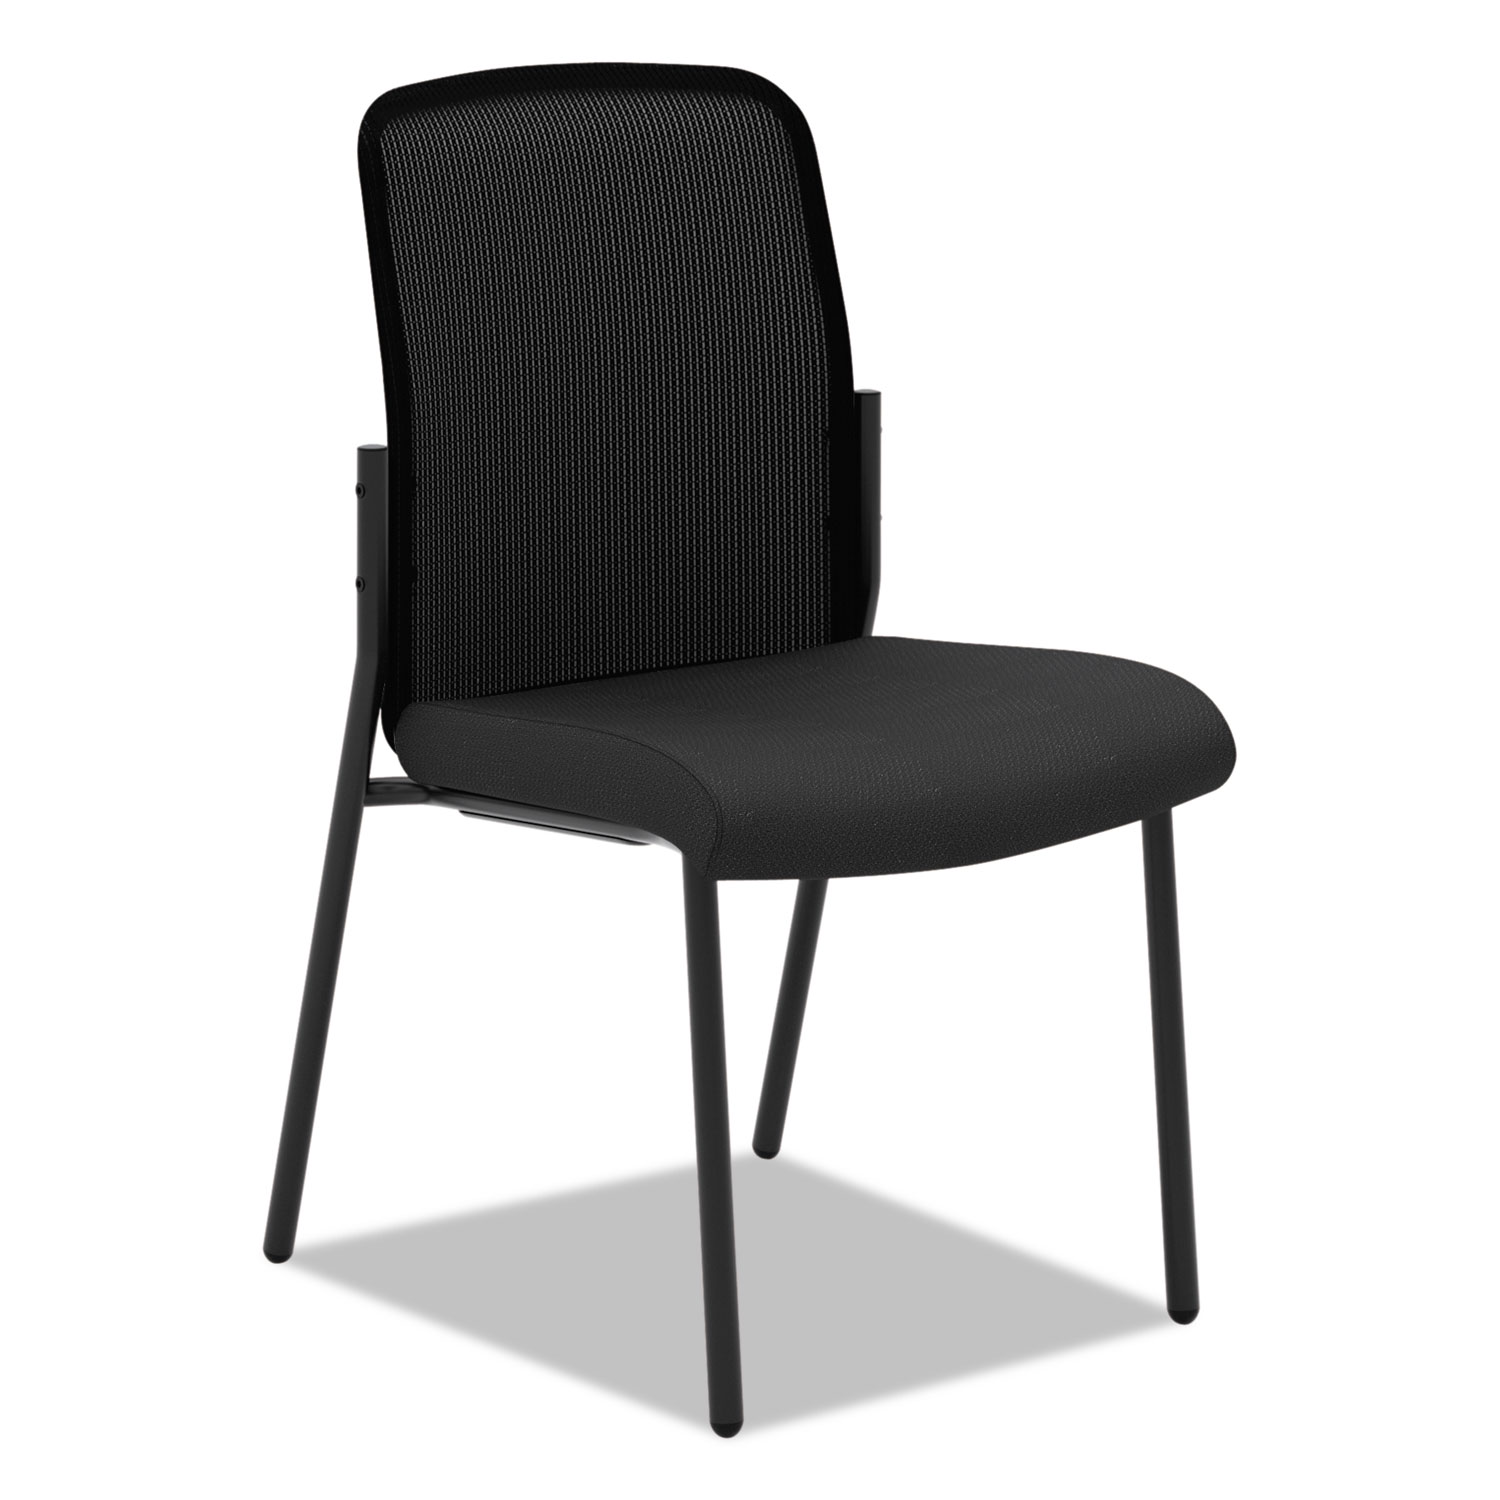  HON HVL508.ES10 VL508 Mesh Back Multi-Purpose Chair, Black Seat/Black Back, Black Base (BSXVL508ES10) 